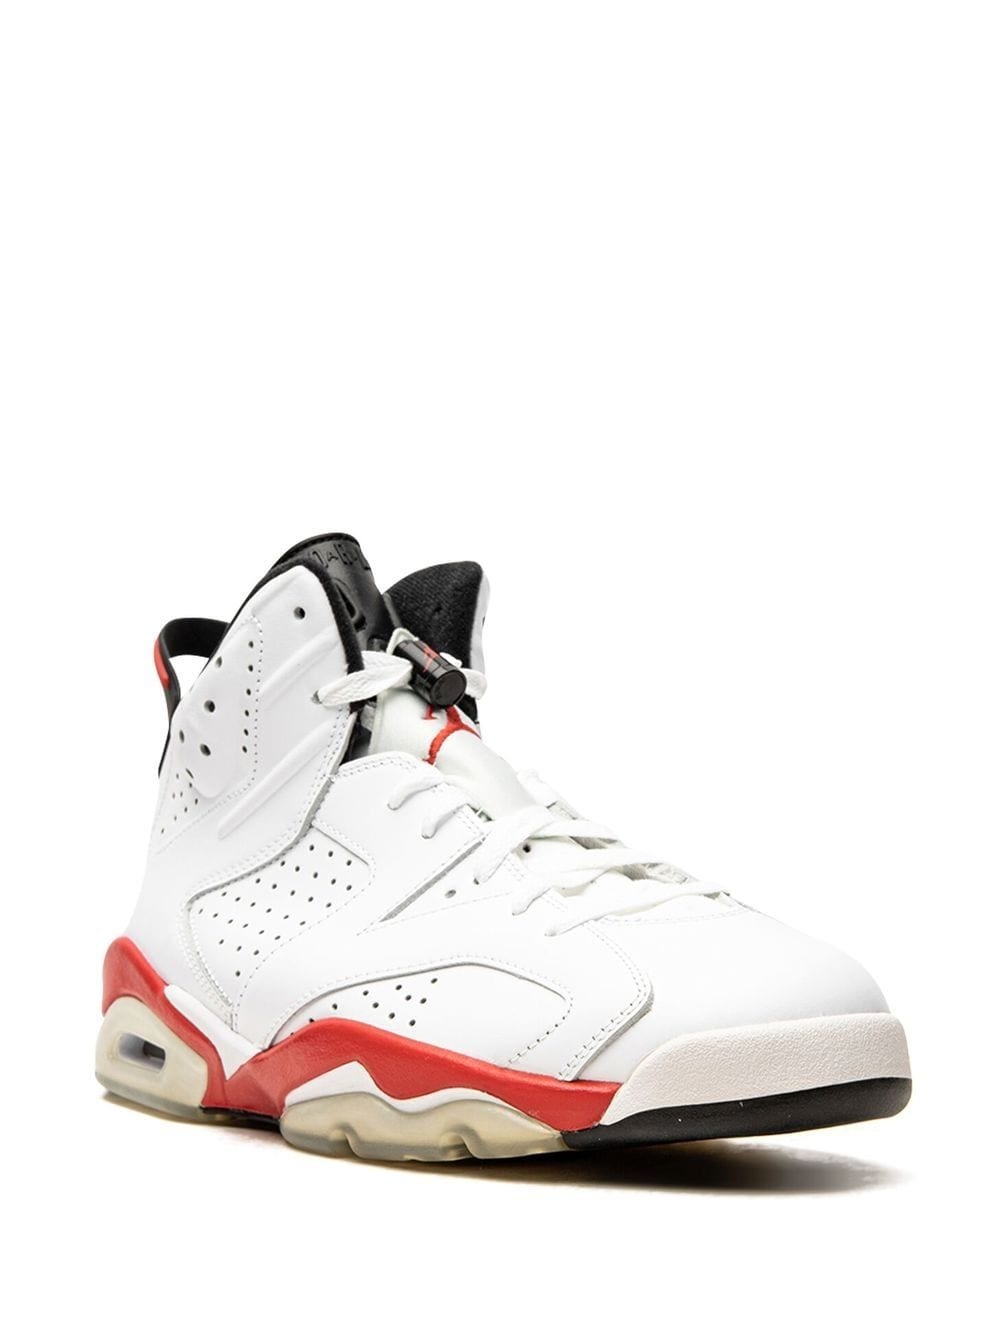 Air Jordan 6 "White/Infrared - Infrared Pack" sneakers - 2